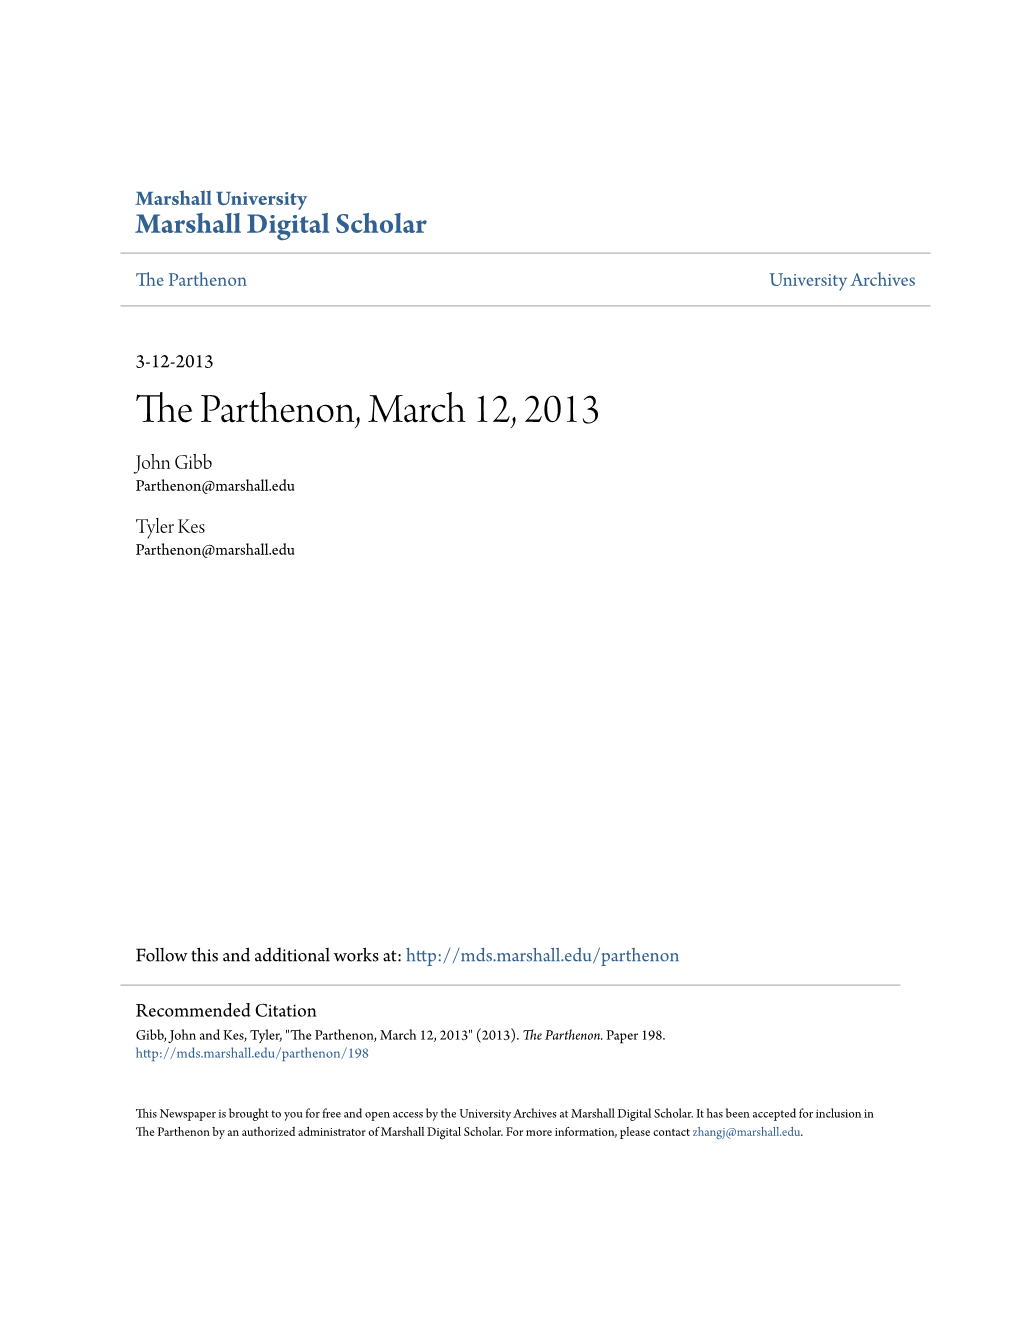 The Parthenon, March 12, 2013